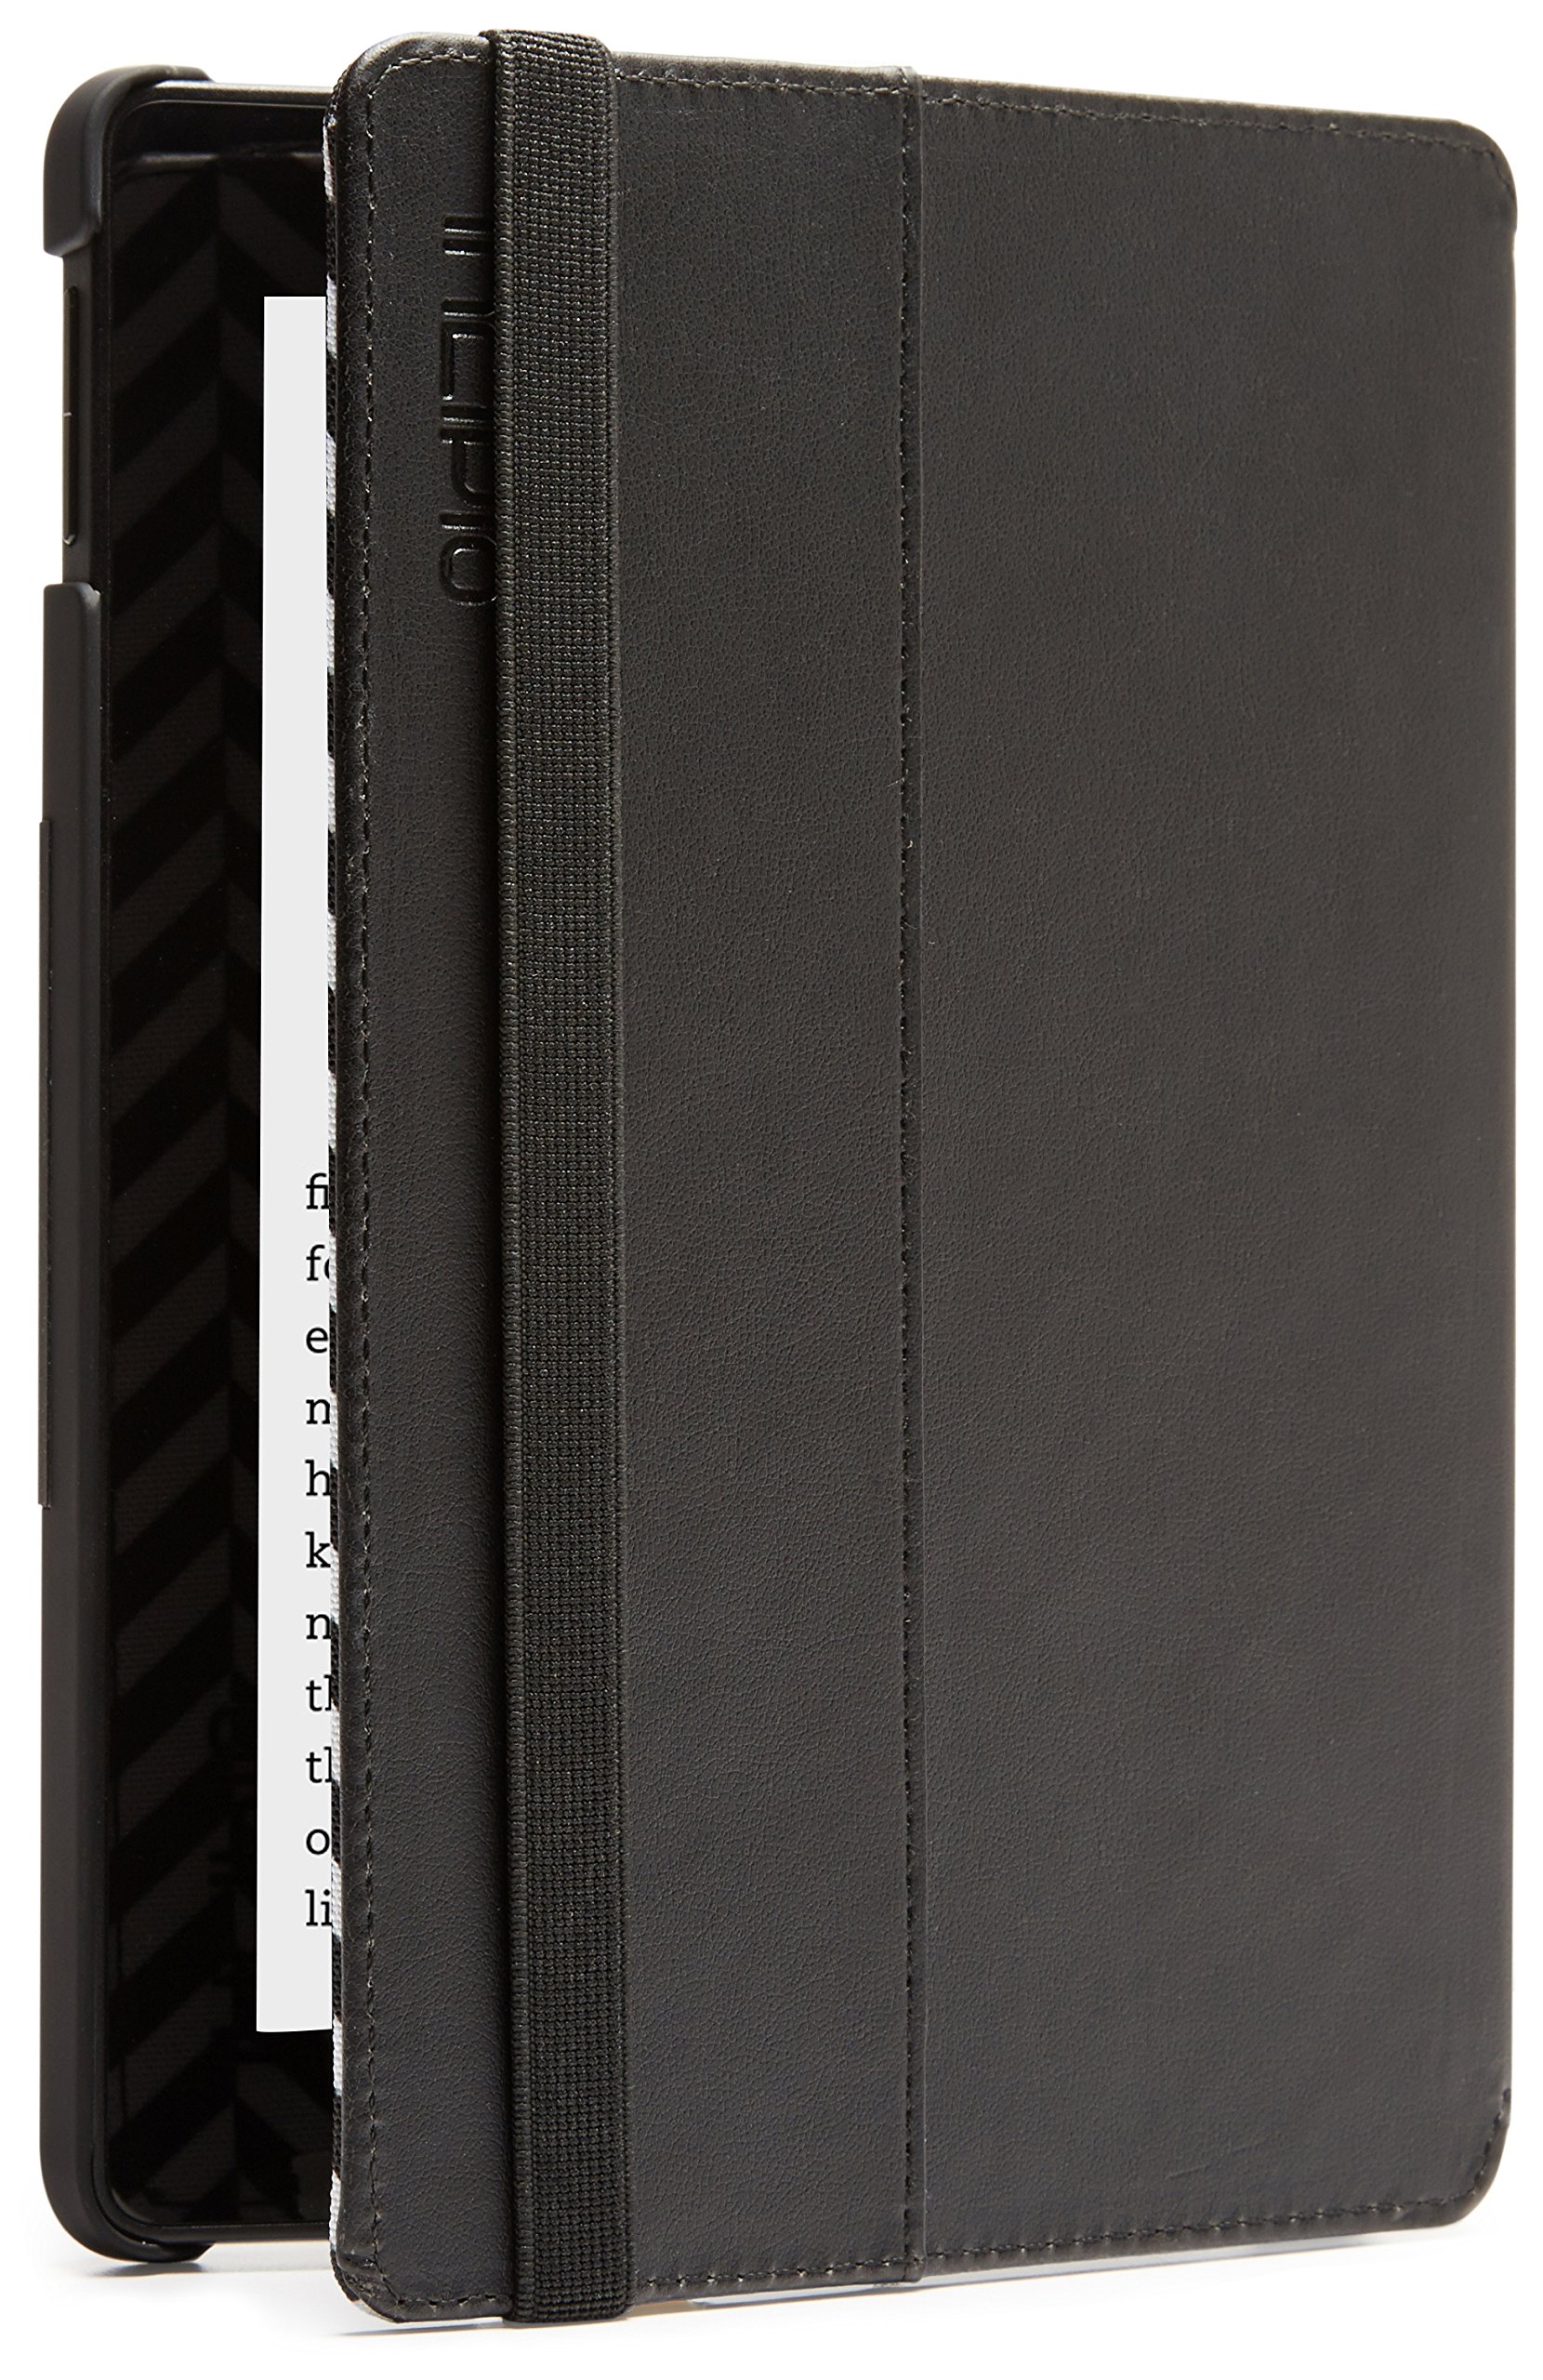 Incipio Standing Folio Pattern Case for Amazon Fire HD 7 (only fits 4th Generation Fire HD 7), Chevron